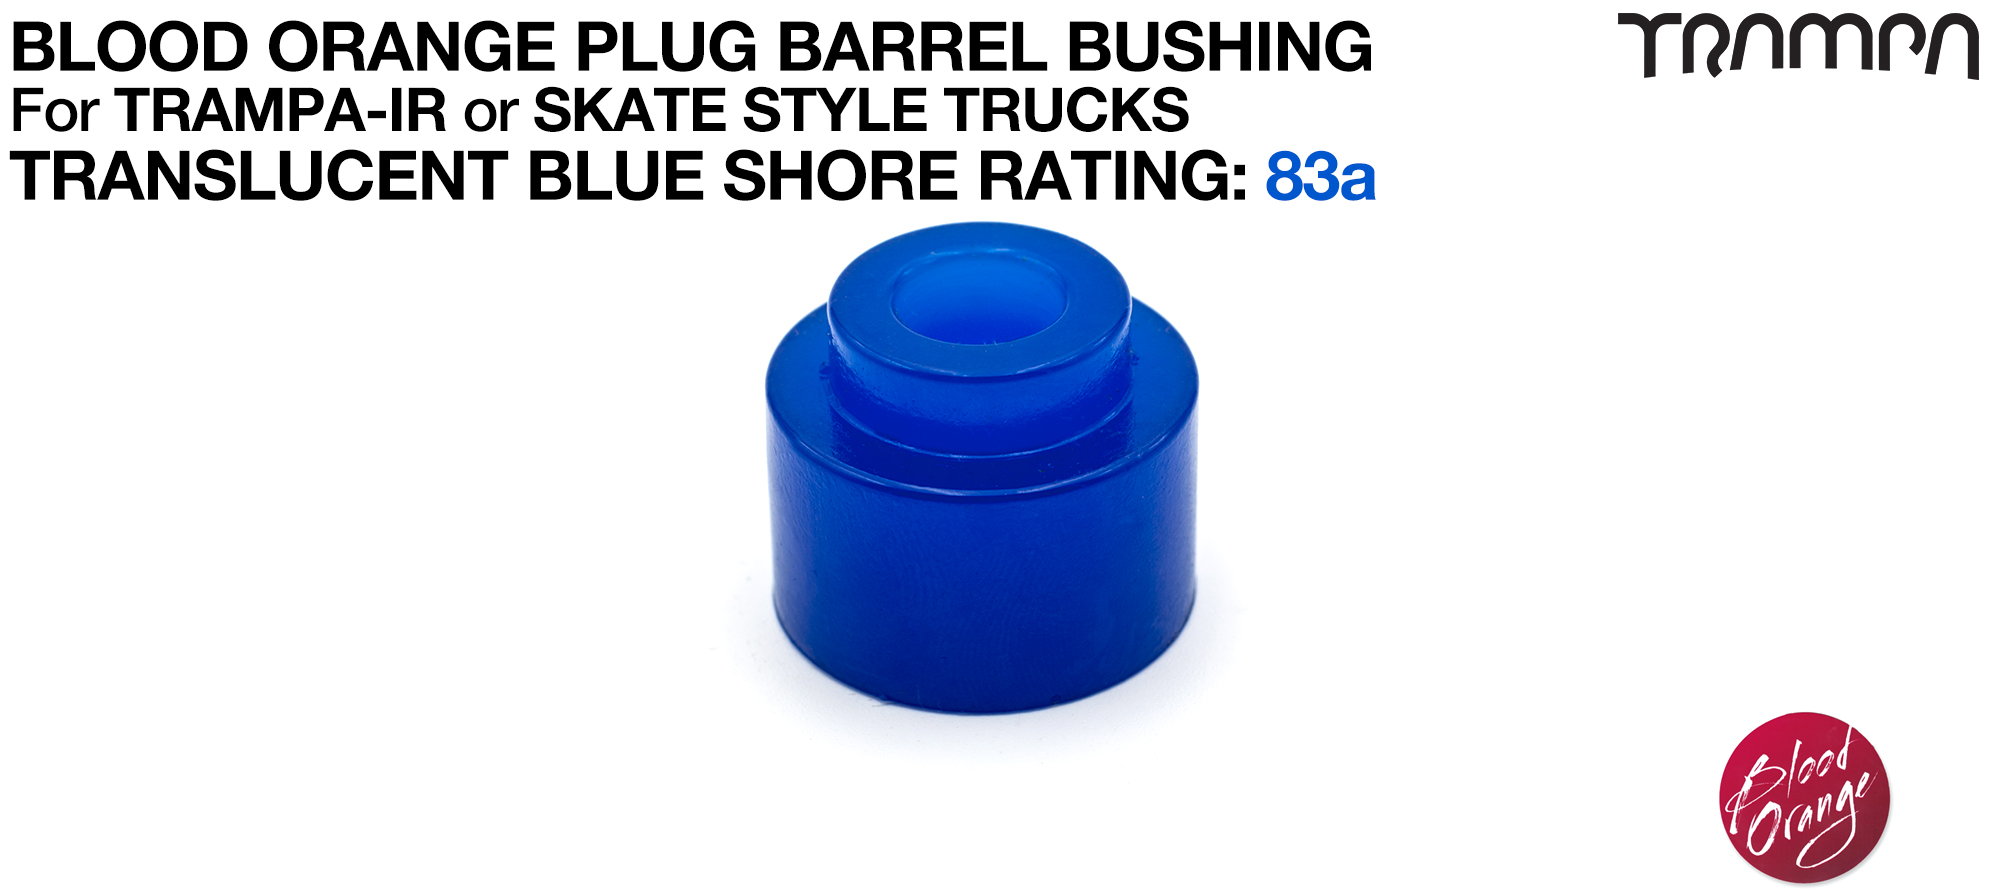 PLUG BARREL Bushings BLUE - 83a  - OUT OF STOCK